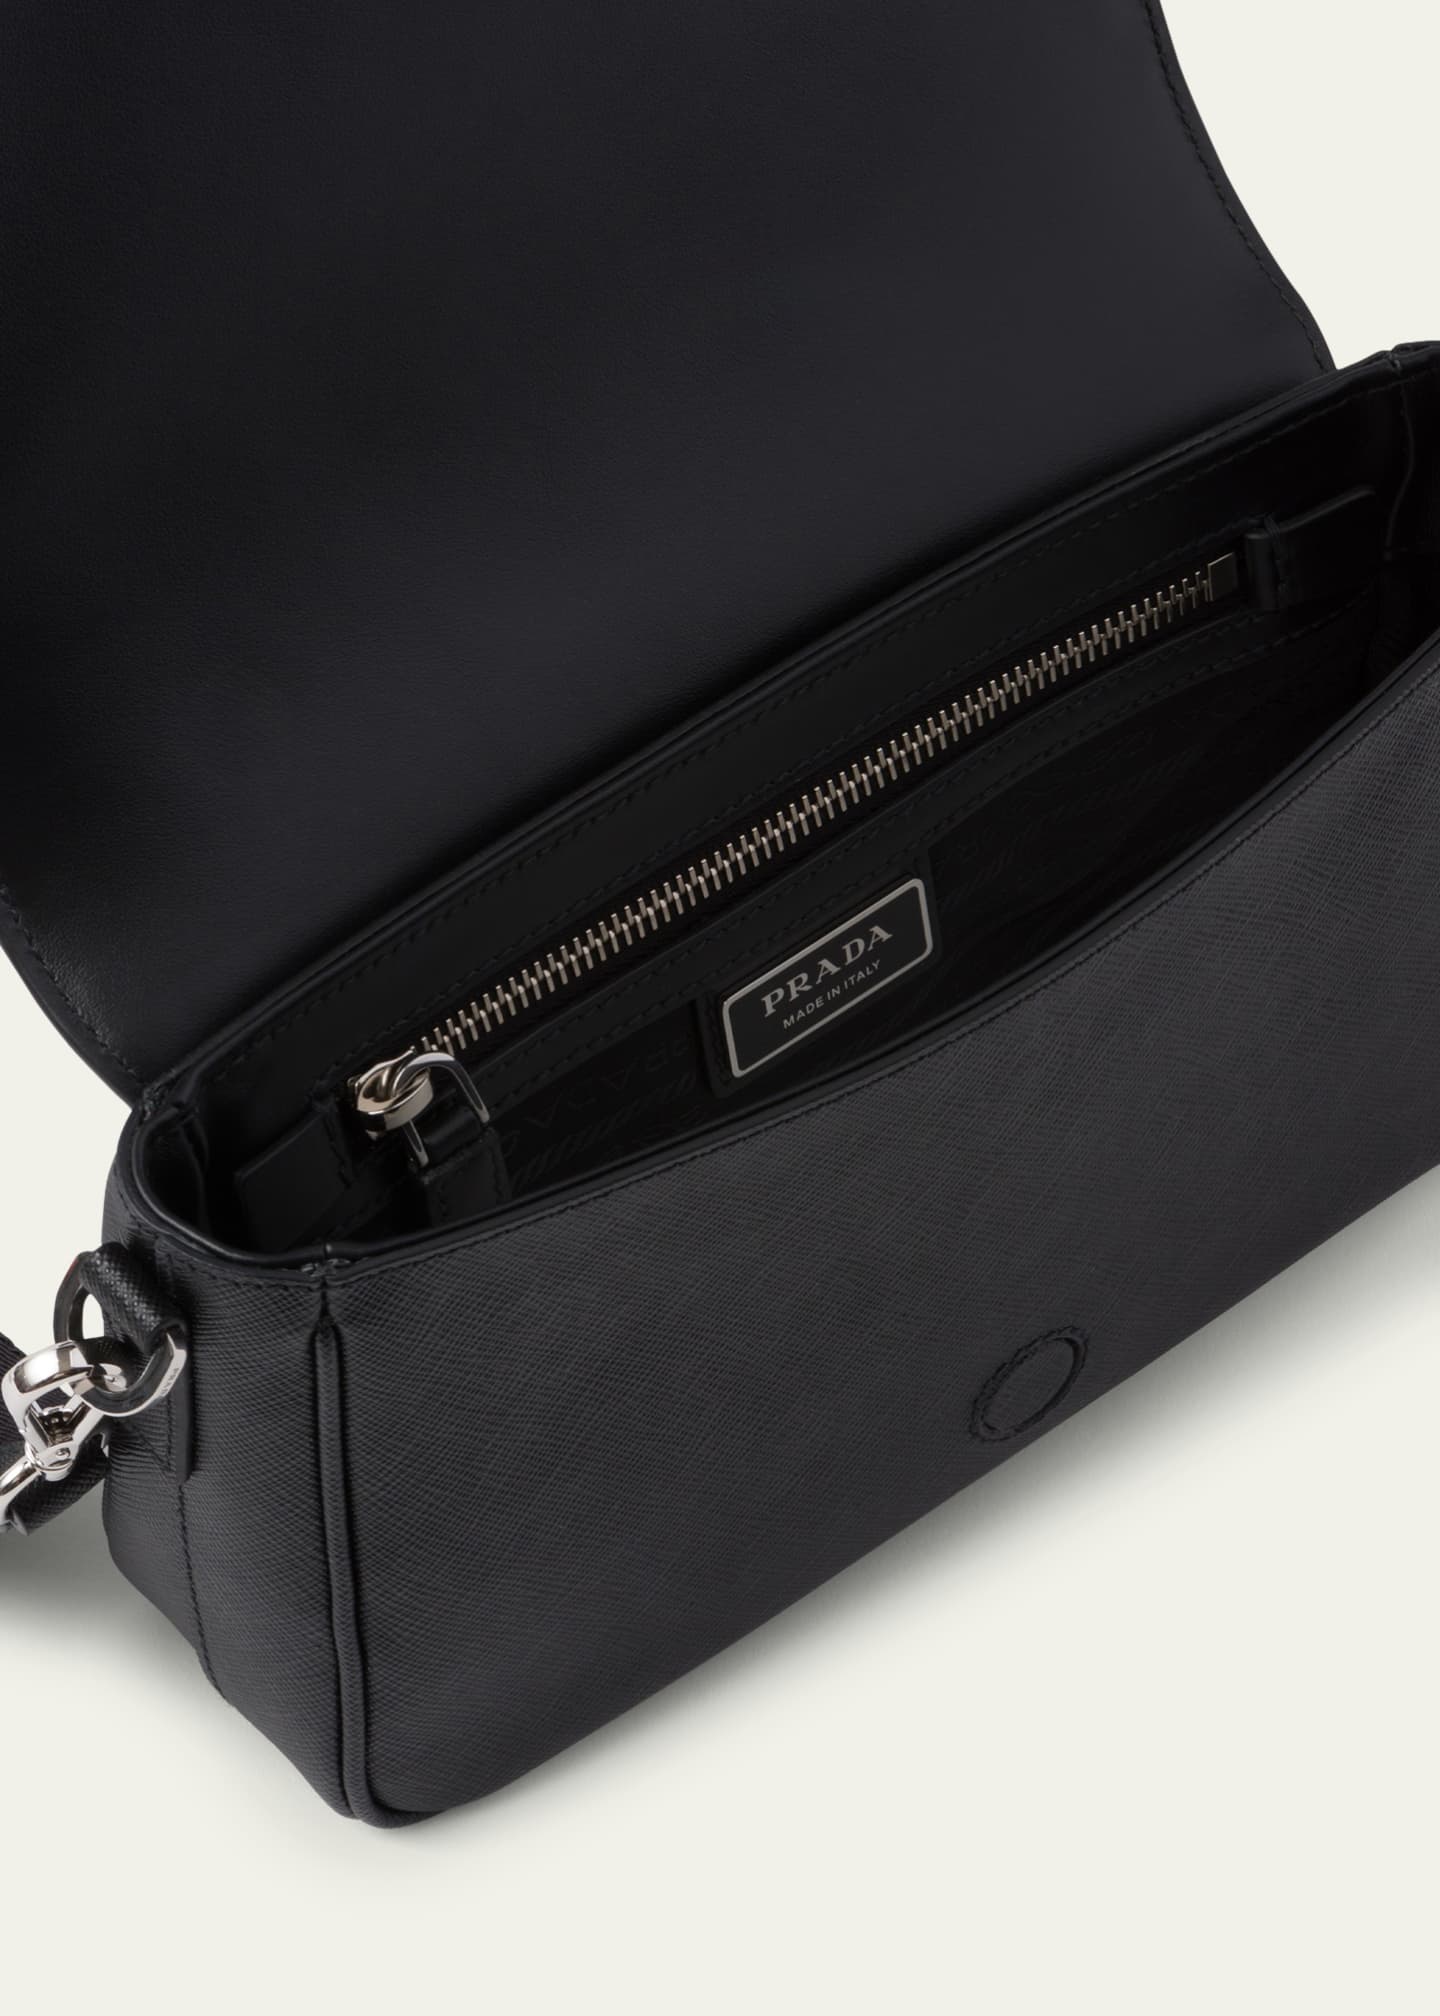 Prada Saffiano Lux Sling Bag - Black Other, Bags - PRA853663